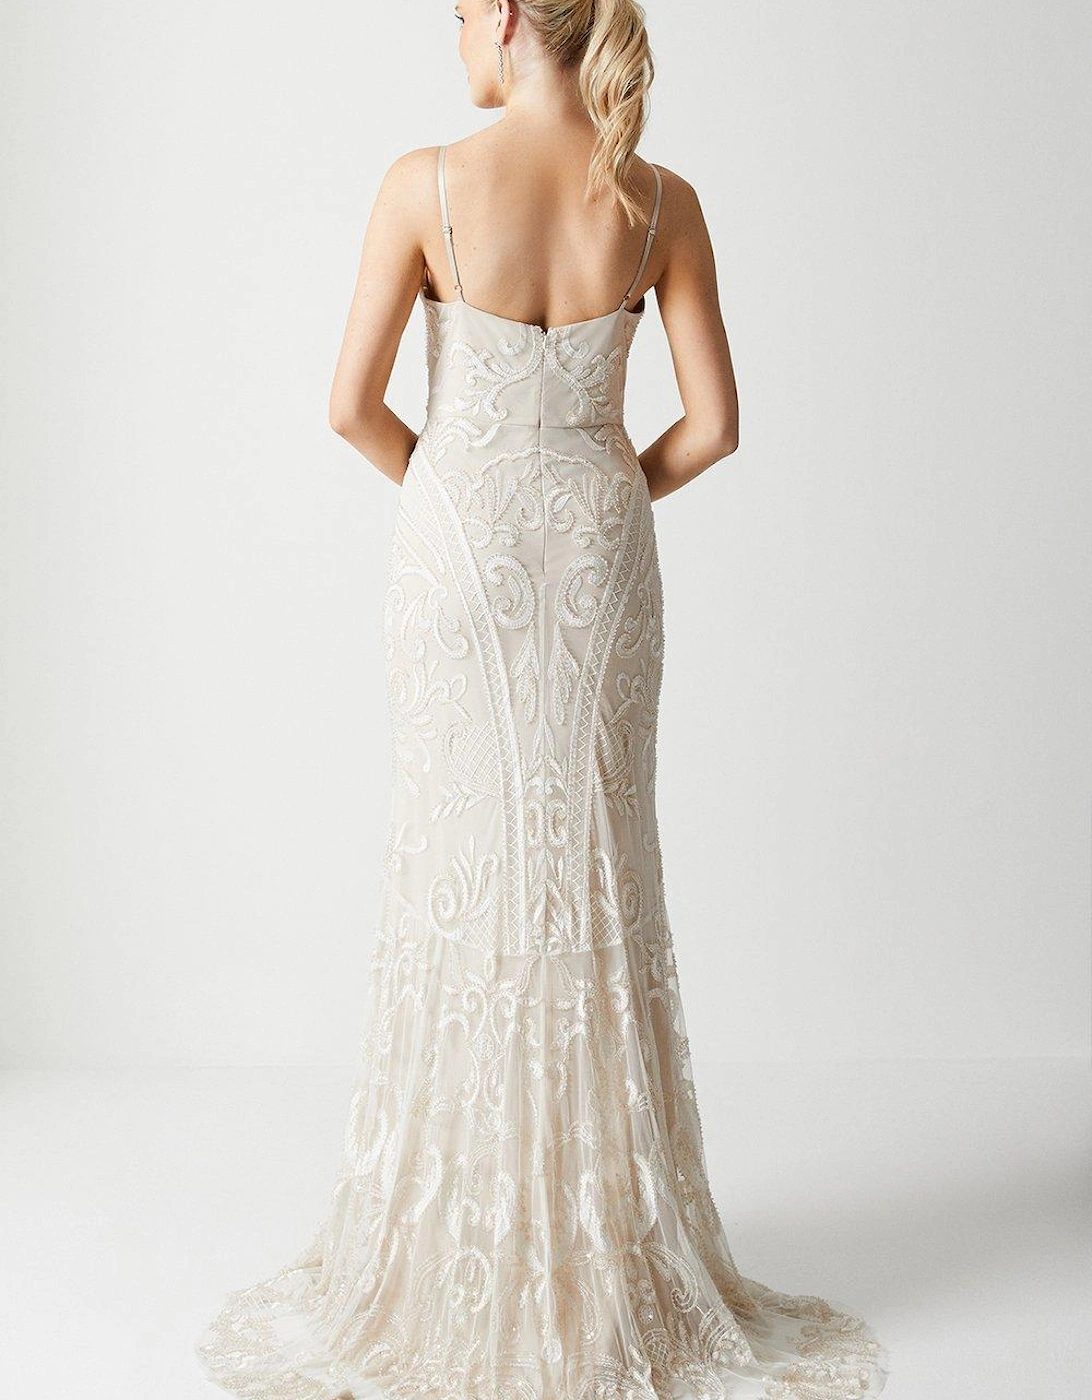 Premium Placement Beadwork Strappy Fishtail Wedding Dress